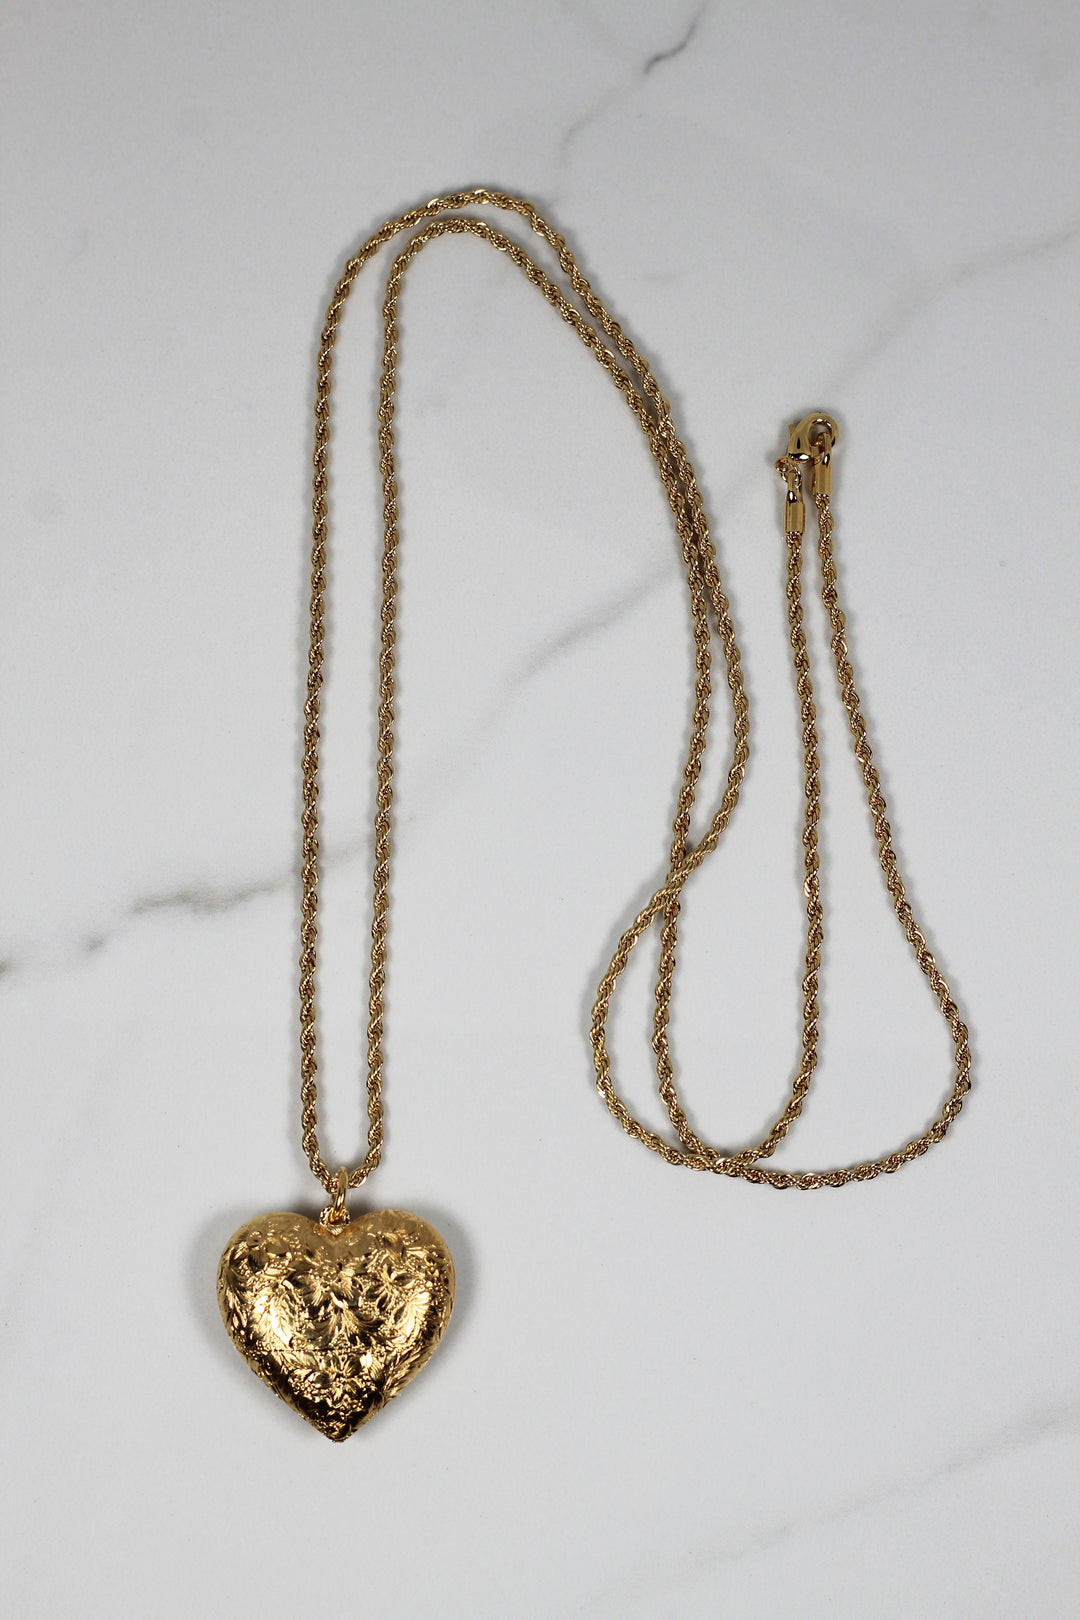 Thomas Heart Necklace